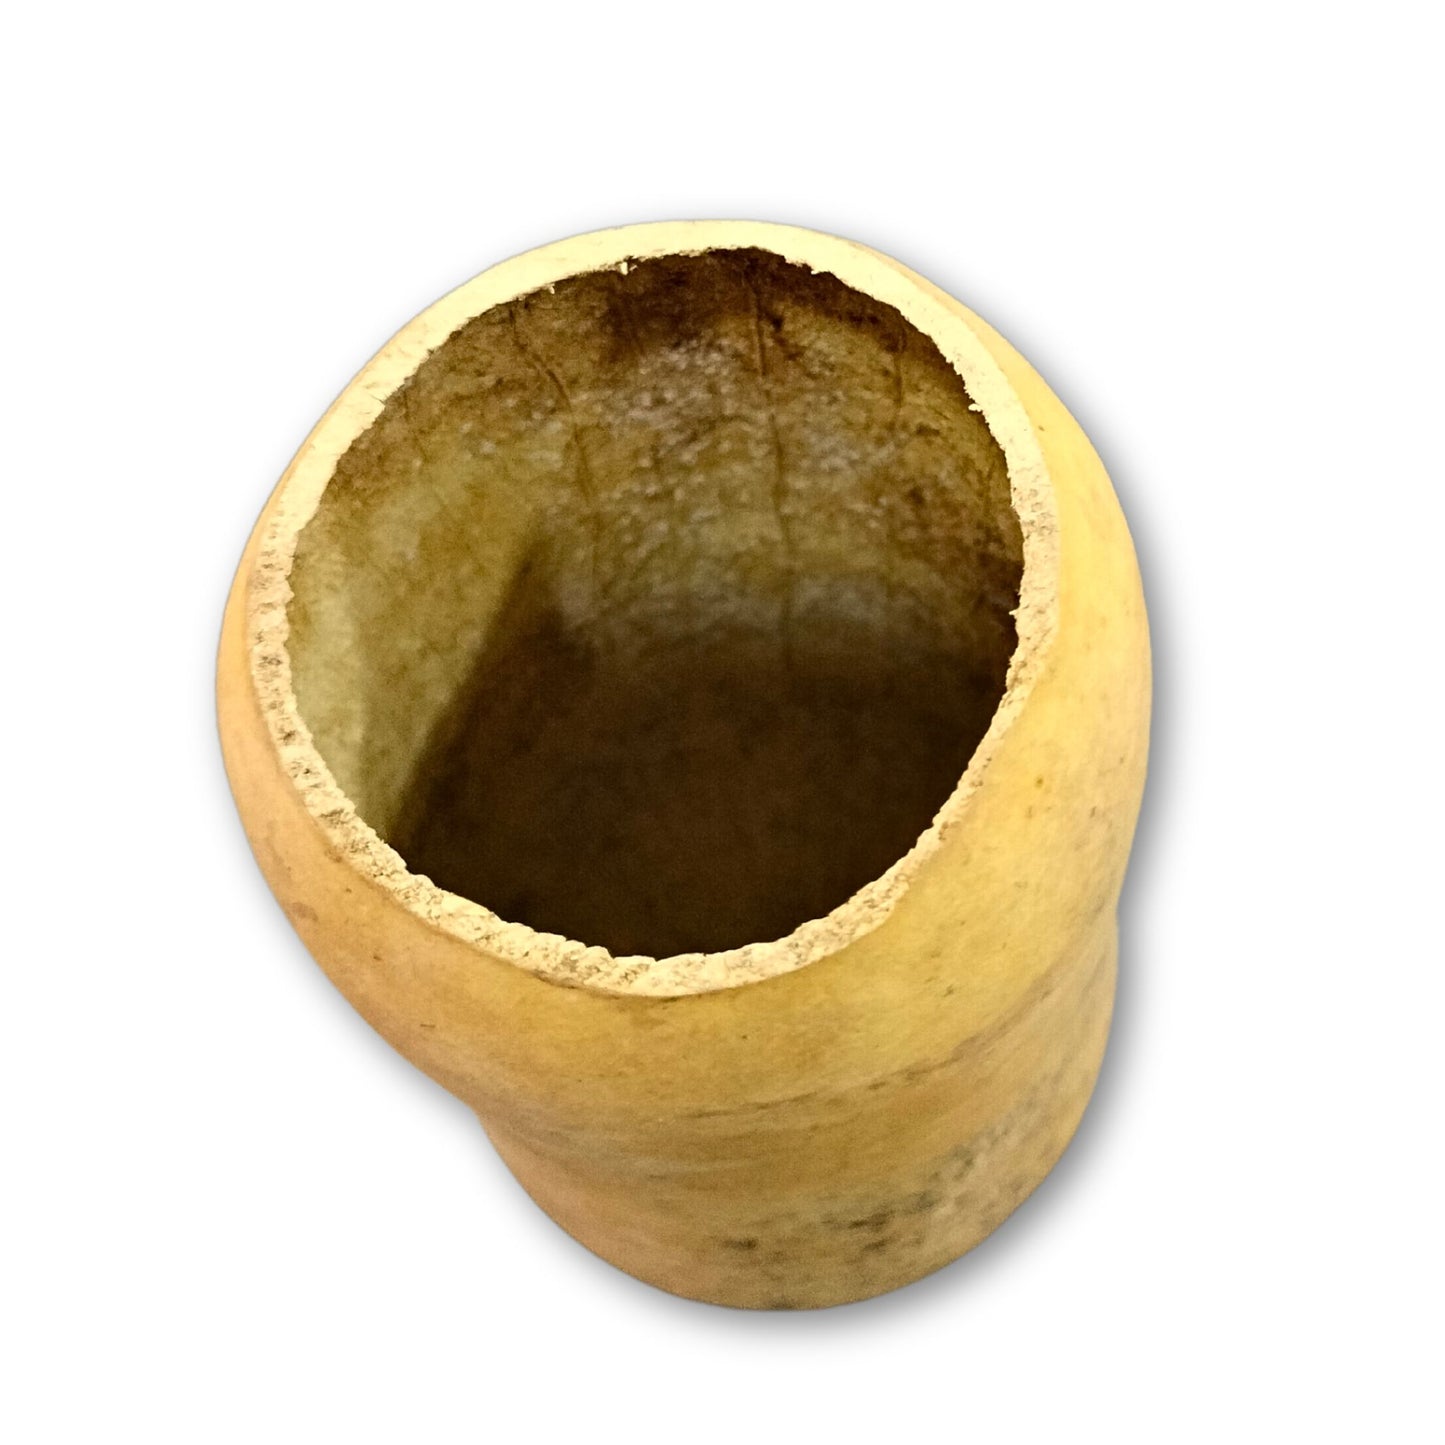 Calabash Palm Wine Cup (Iko-Nkwu) African Hand-carved Local Wine Cup 5" | Wood Carved Wine Cup